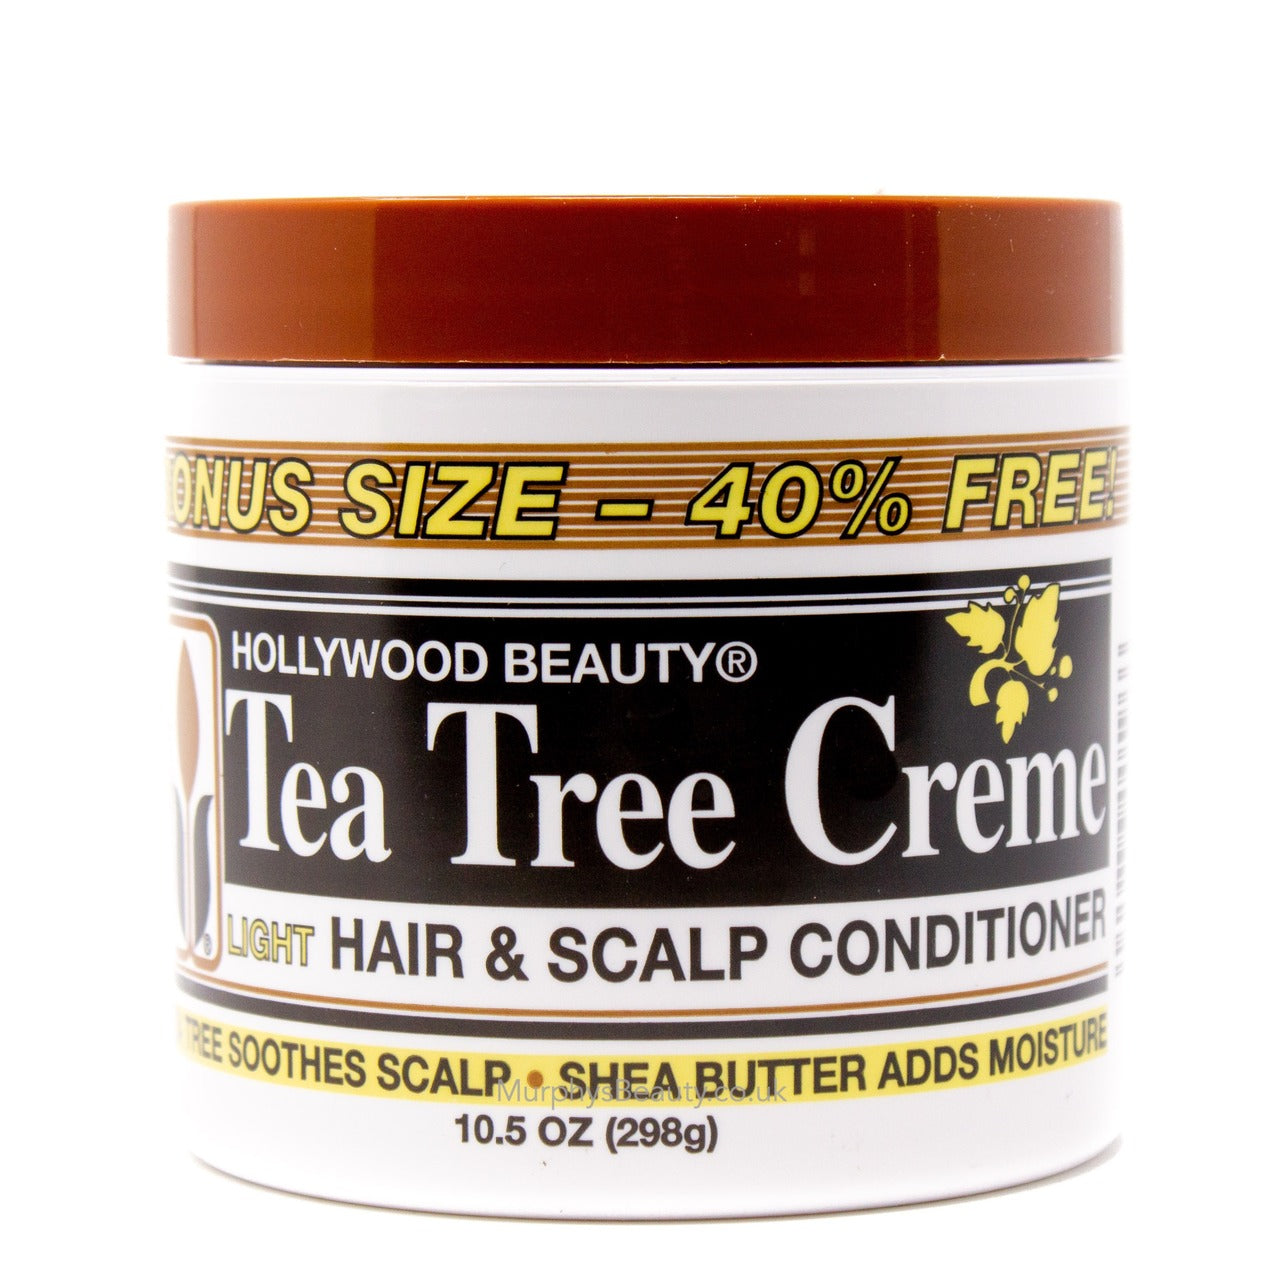 Hollywood Beauty Tea Tree Creme Light Hair & Scalp Conditioner - 10.5oz